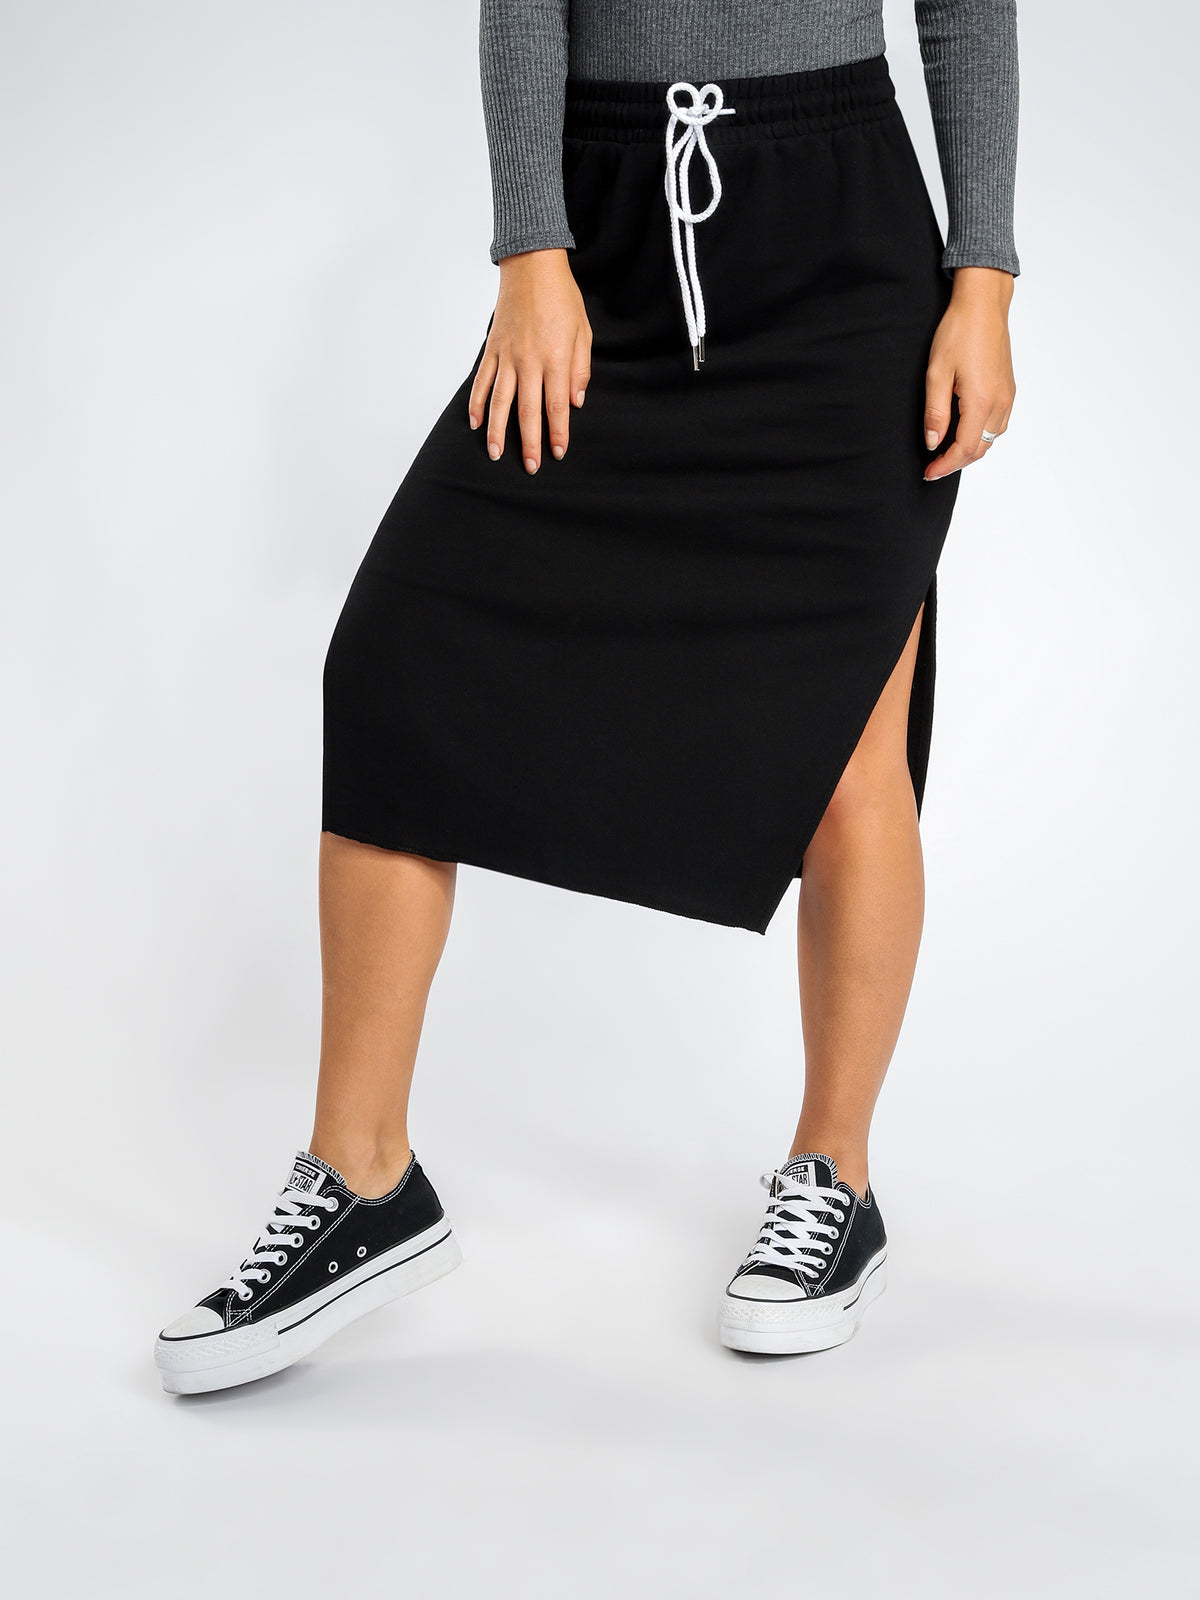 Ripley Drawstring Skirt in Black